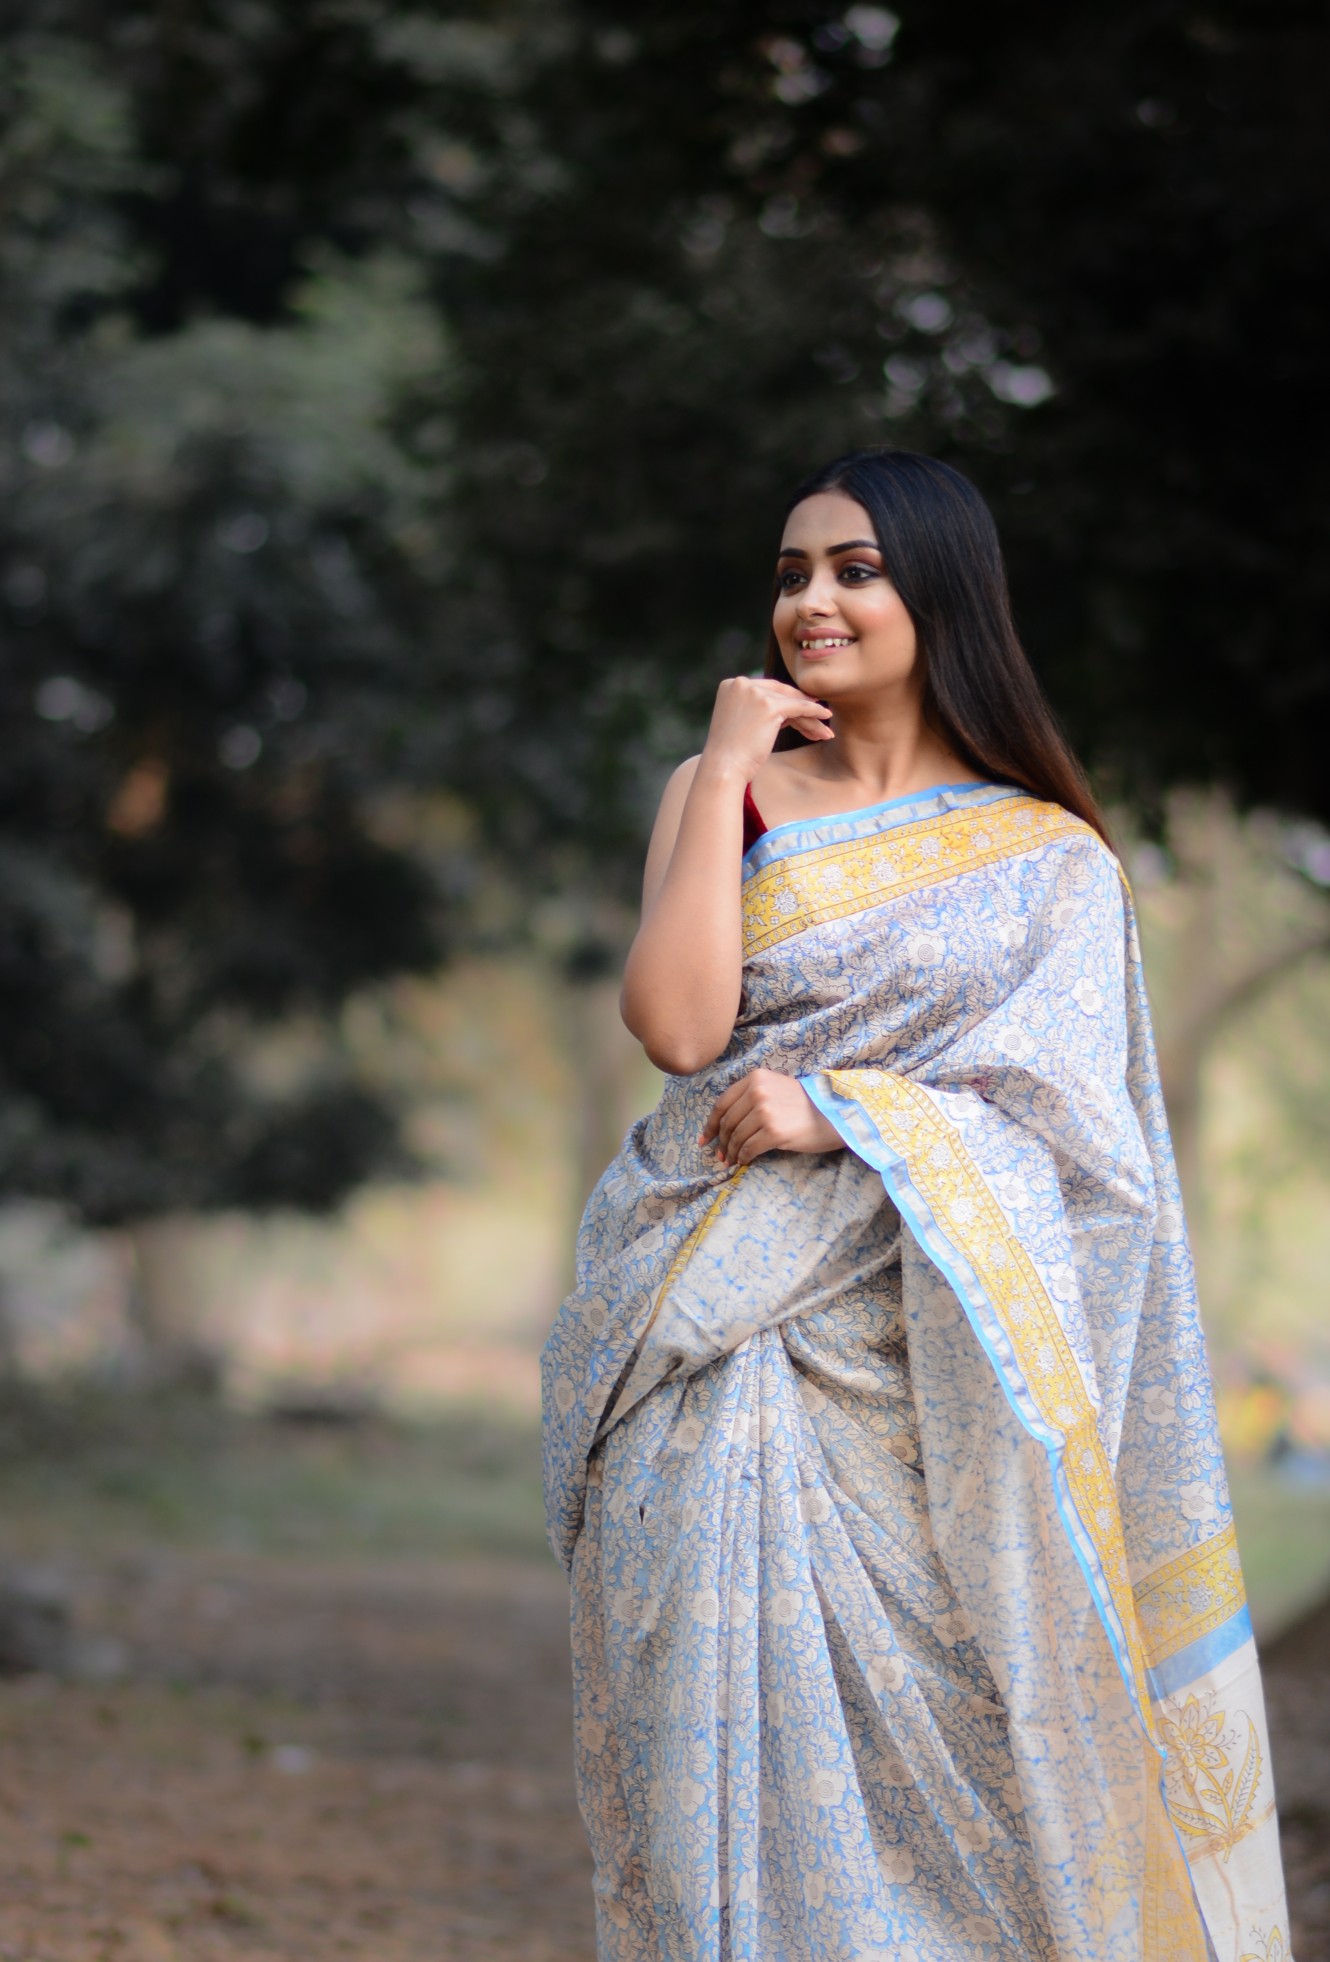 Chettinad cotton | Saree poses, Saree models, Cotton saree blouse designs